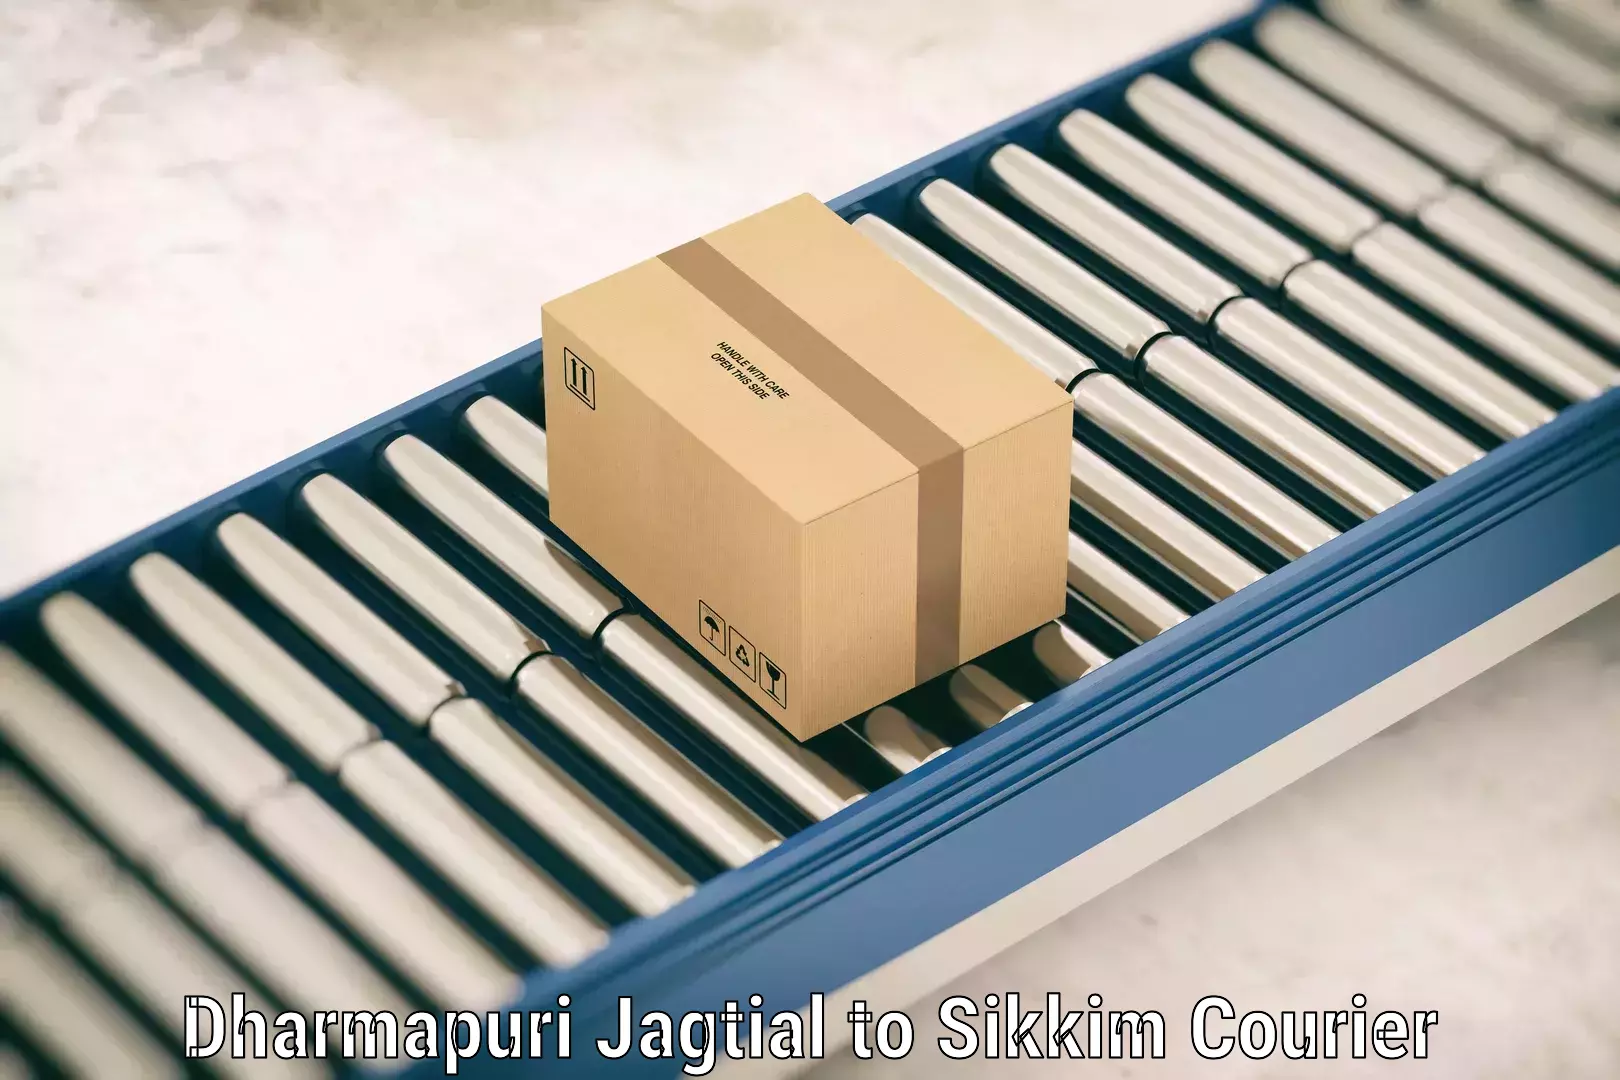 Baggage transport scheduler Dharmapuri Jagtial to Sikkim